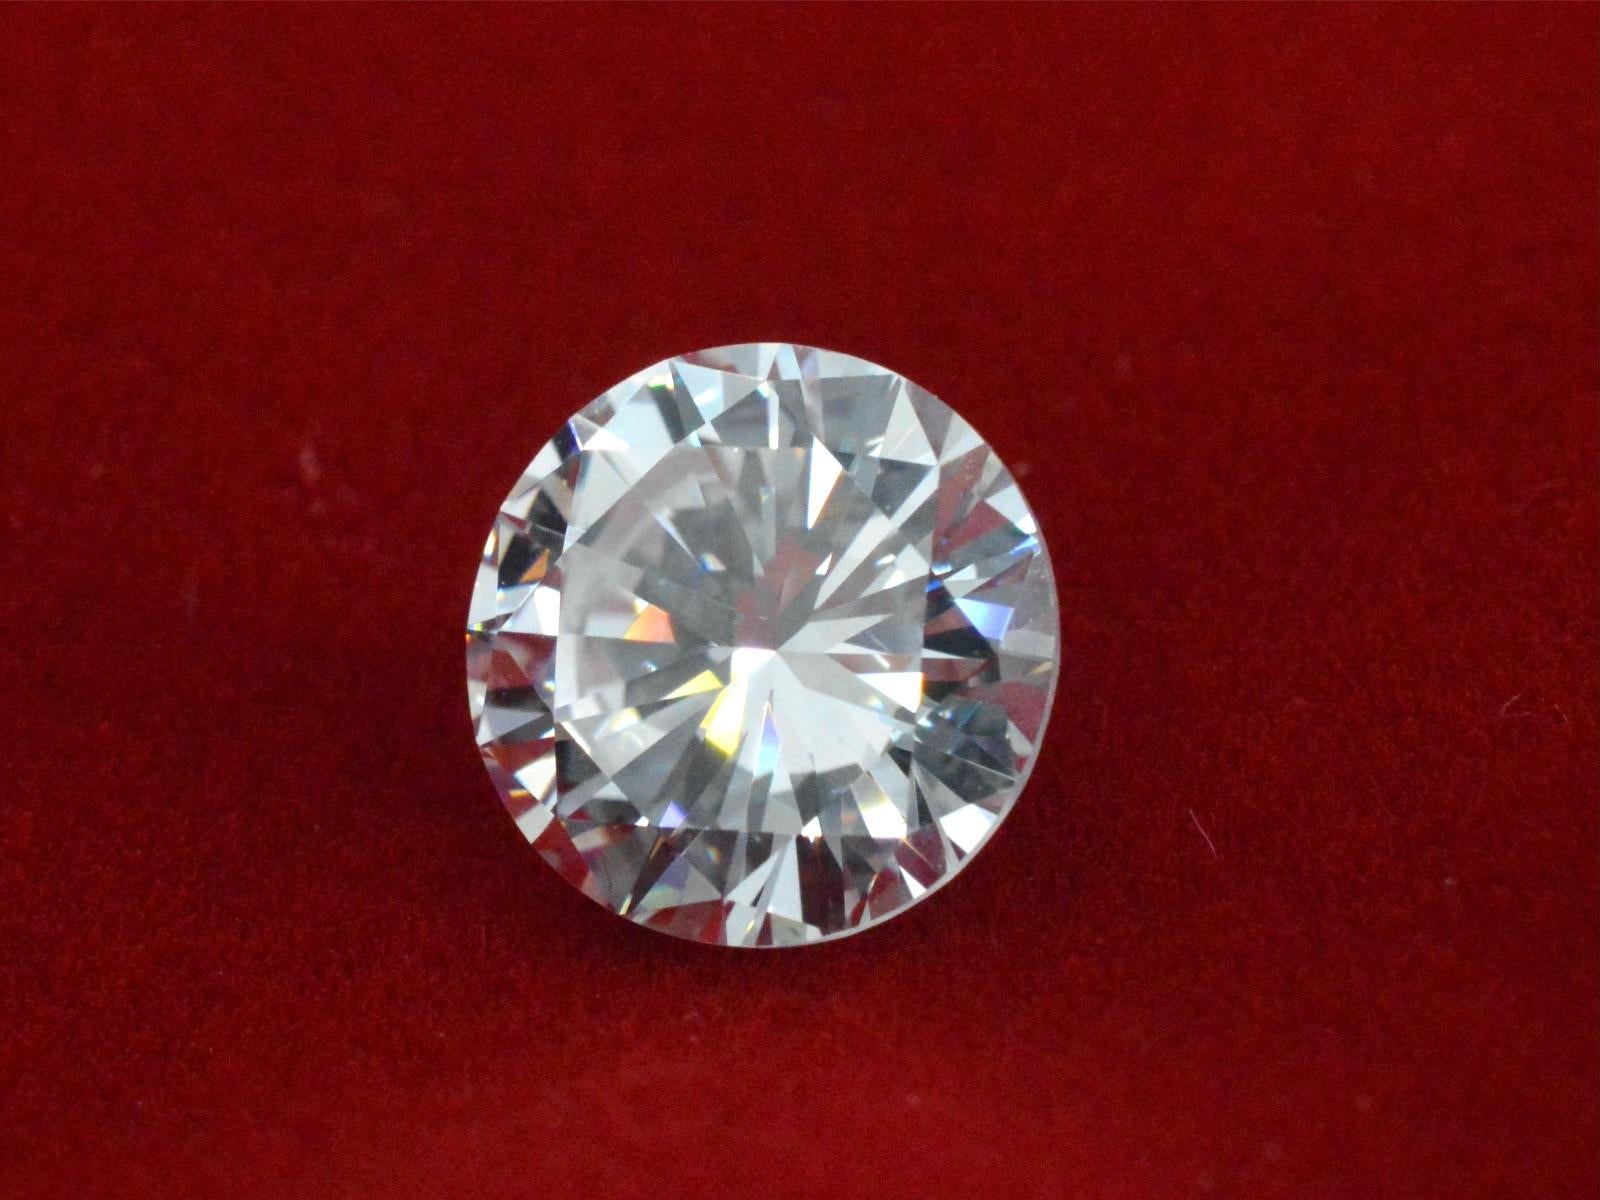 Quantity: 1
 Product Name: 1.06 Carat Genuine Starcut Diamond (Certified);
 Cut shape: Starcut brilliant cut
 Weight: 1.06 carat
 Color: G
 Purity: VVS2
 Certificate: IGI
 Certificate number: 564346916
Retail value: € 34.500,-